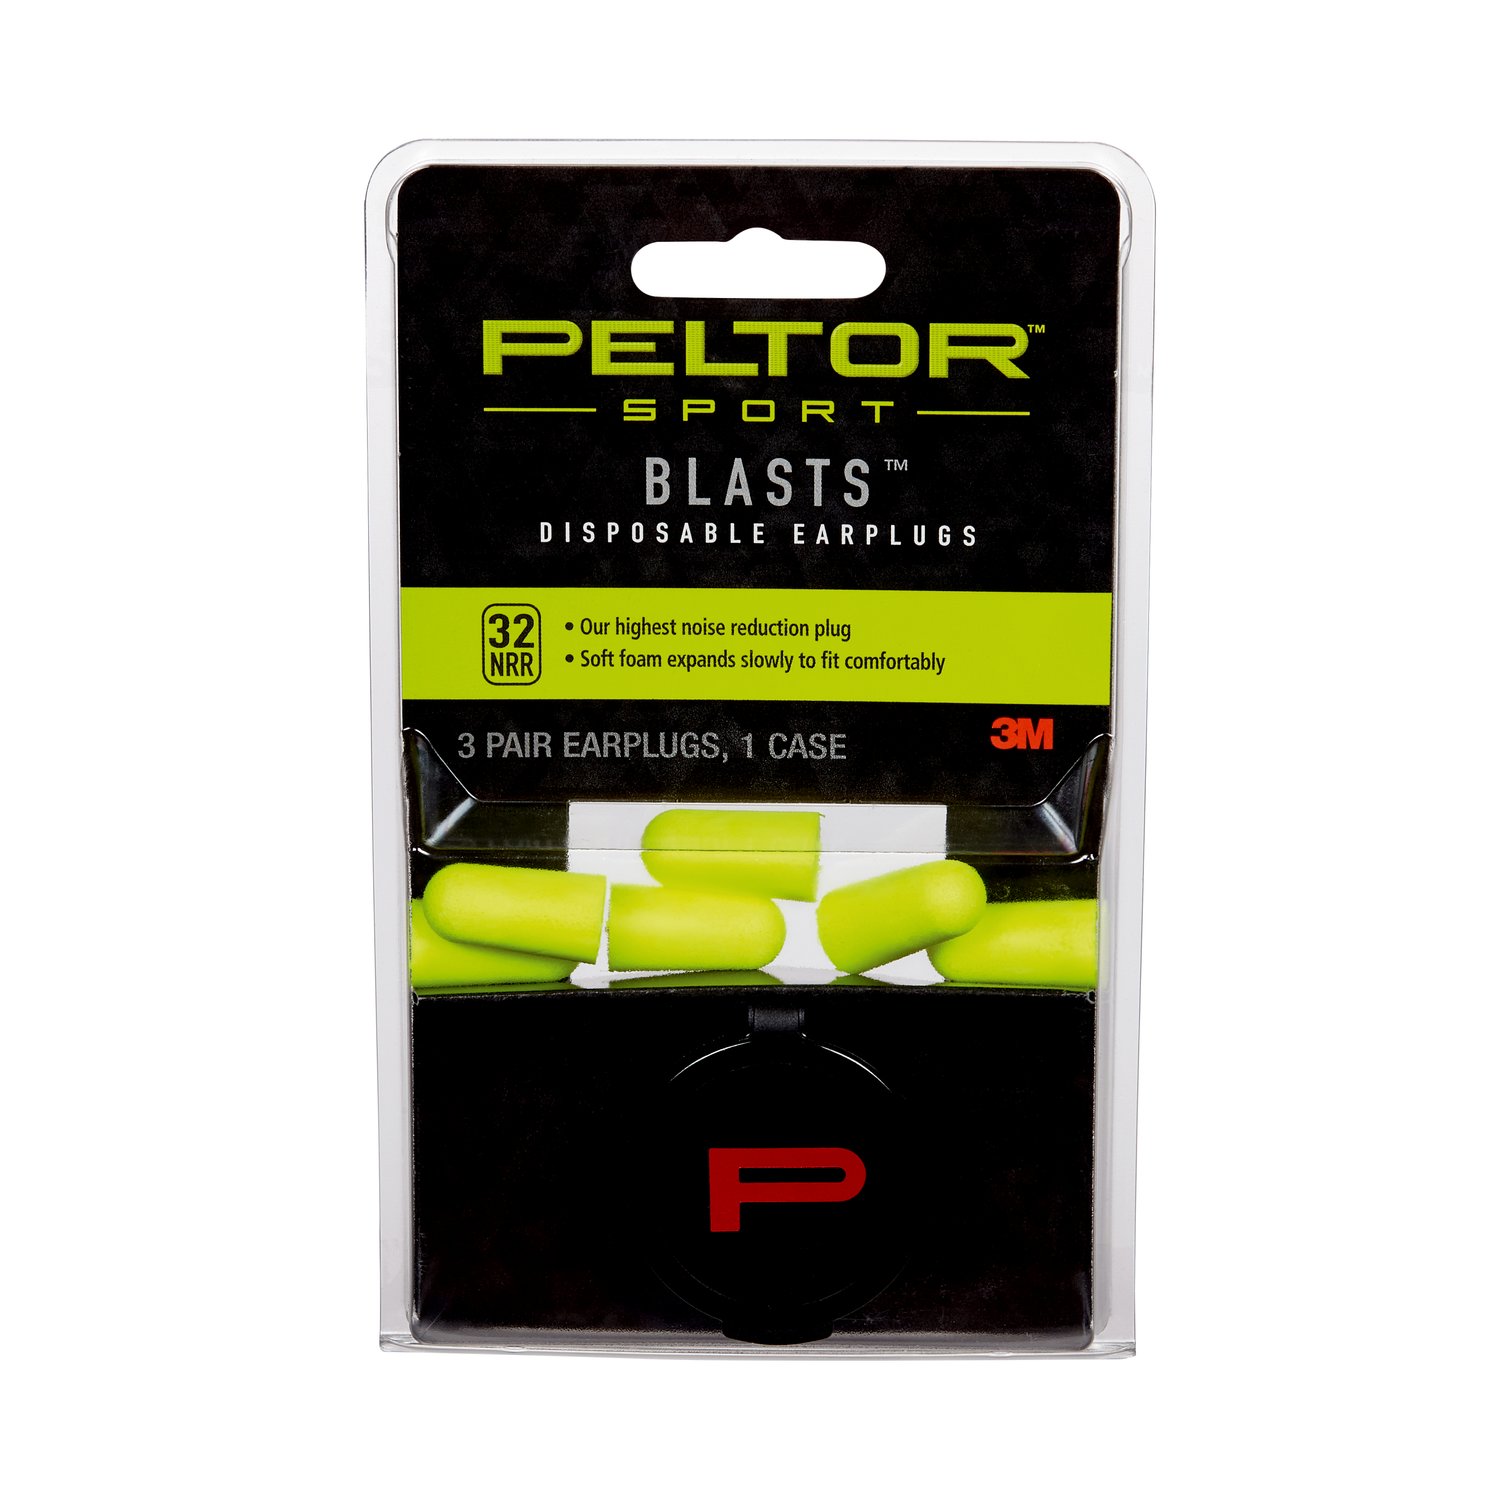 7010312971 - Peltor Sport Blasts Disposable Earplugs 97080-10C, 3 Pair Pack, Neon
Yellow